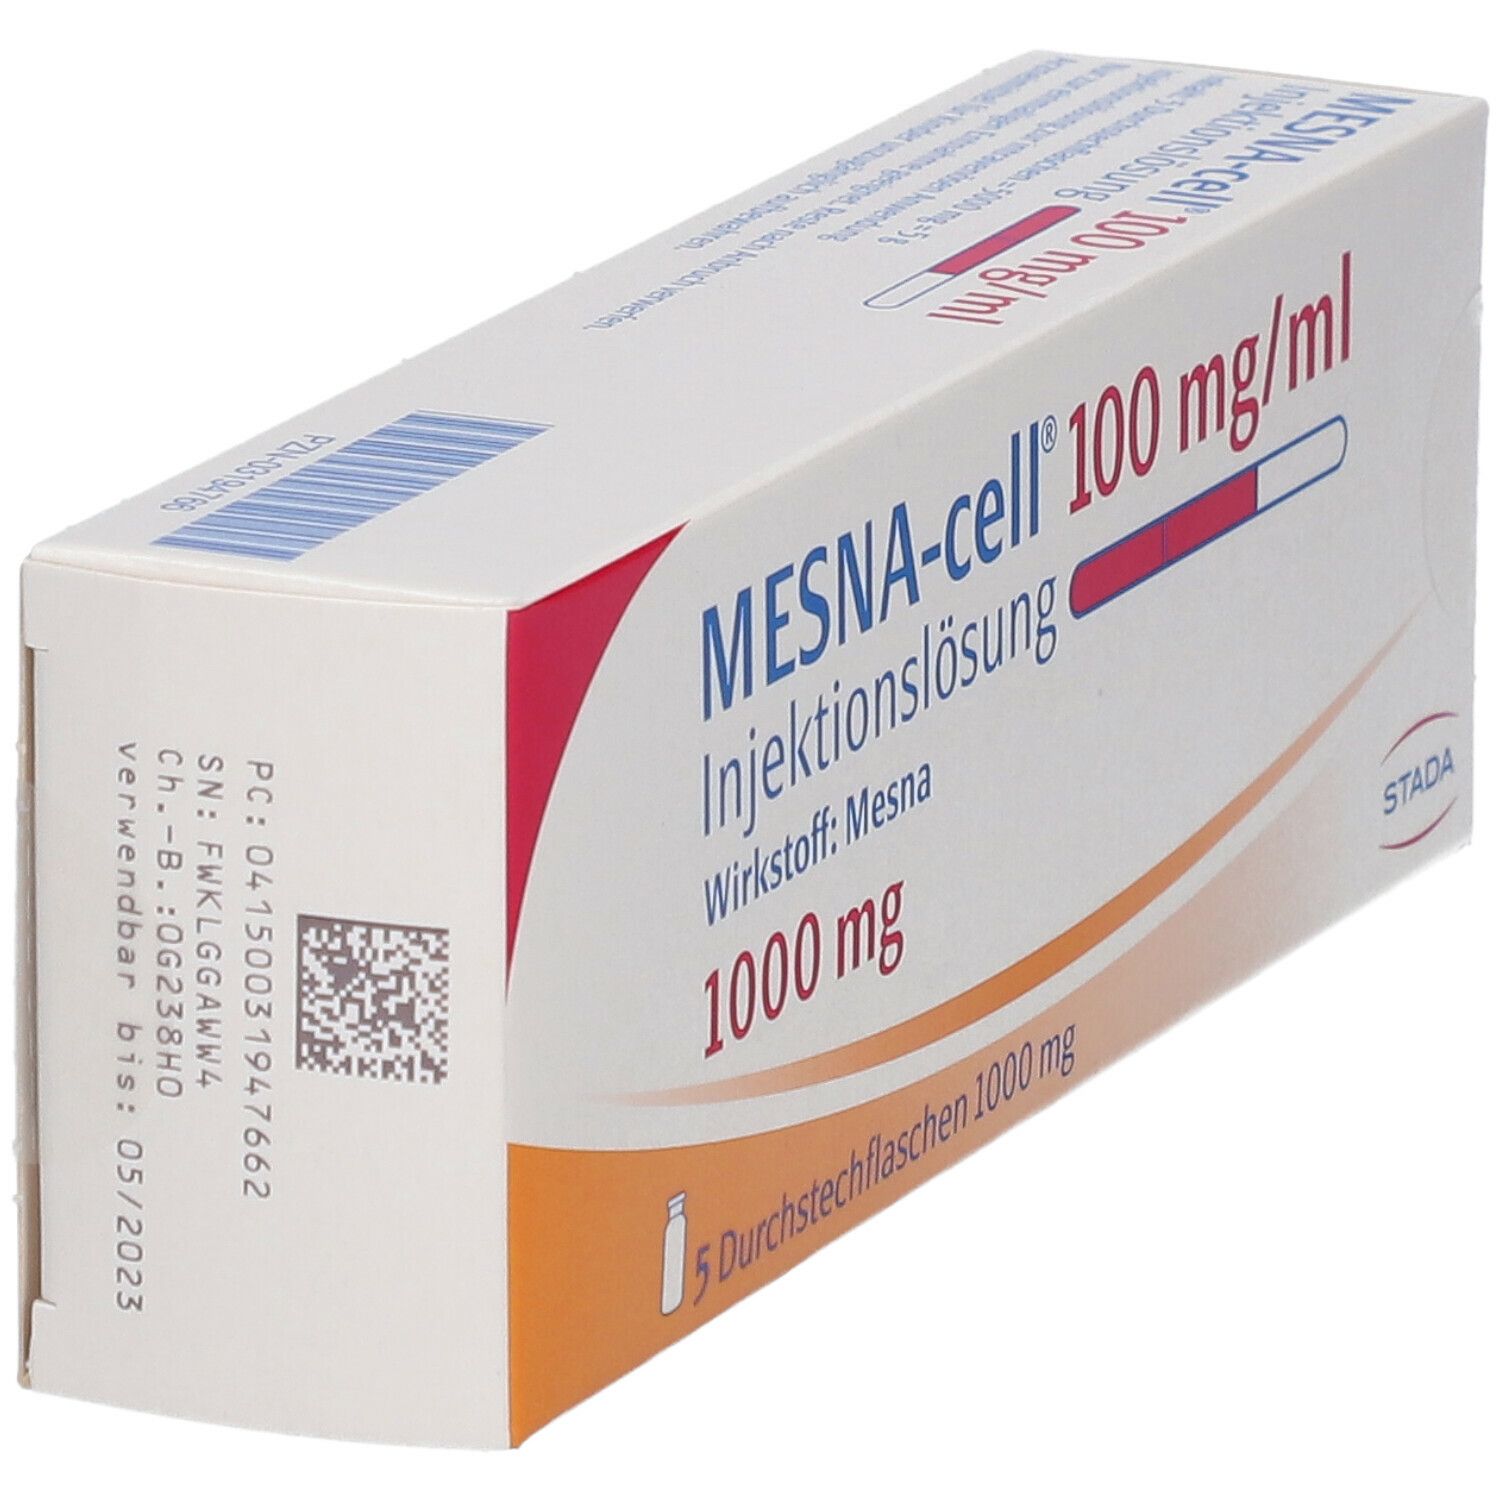 MESNA-cell® 100 mg/ml 1000 mg